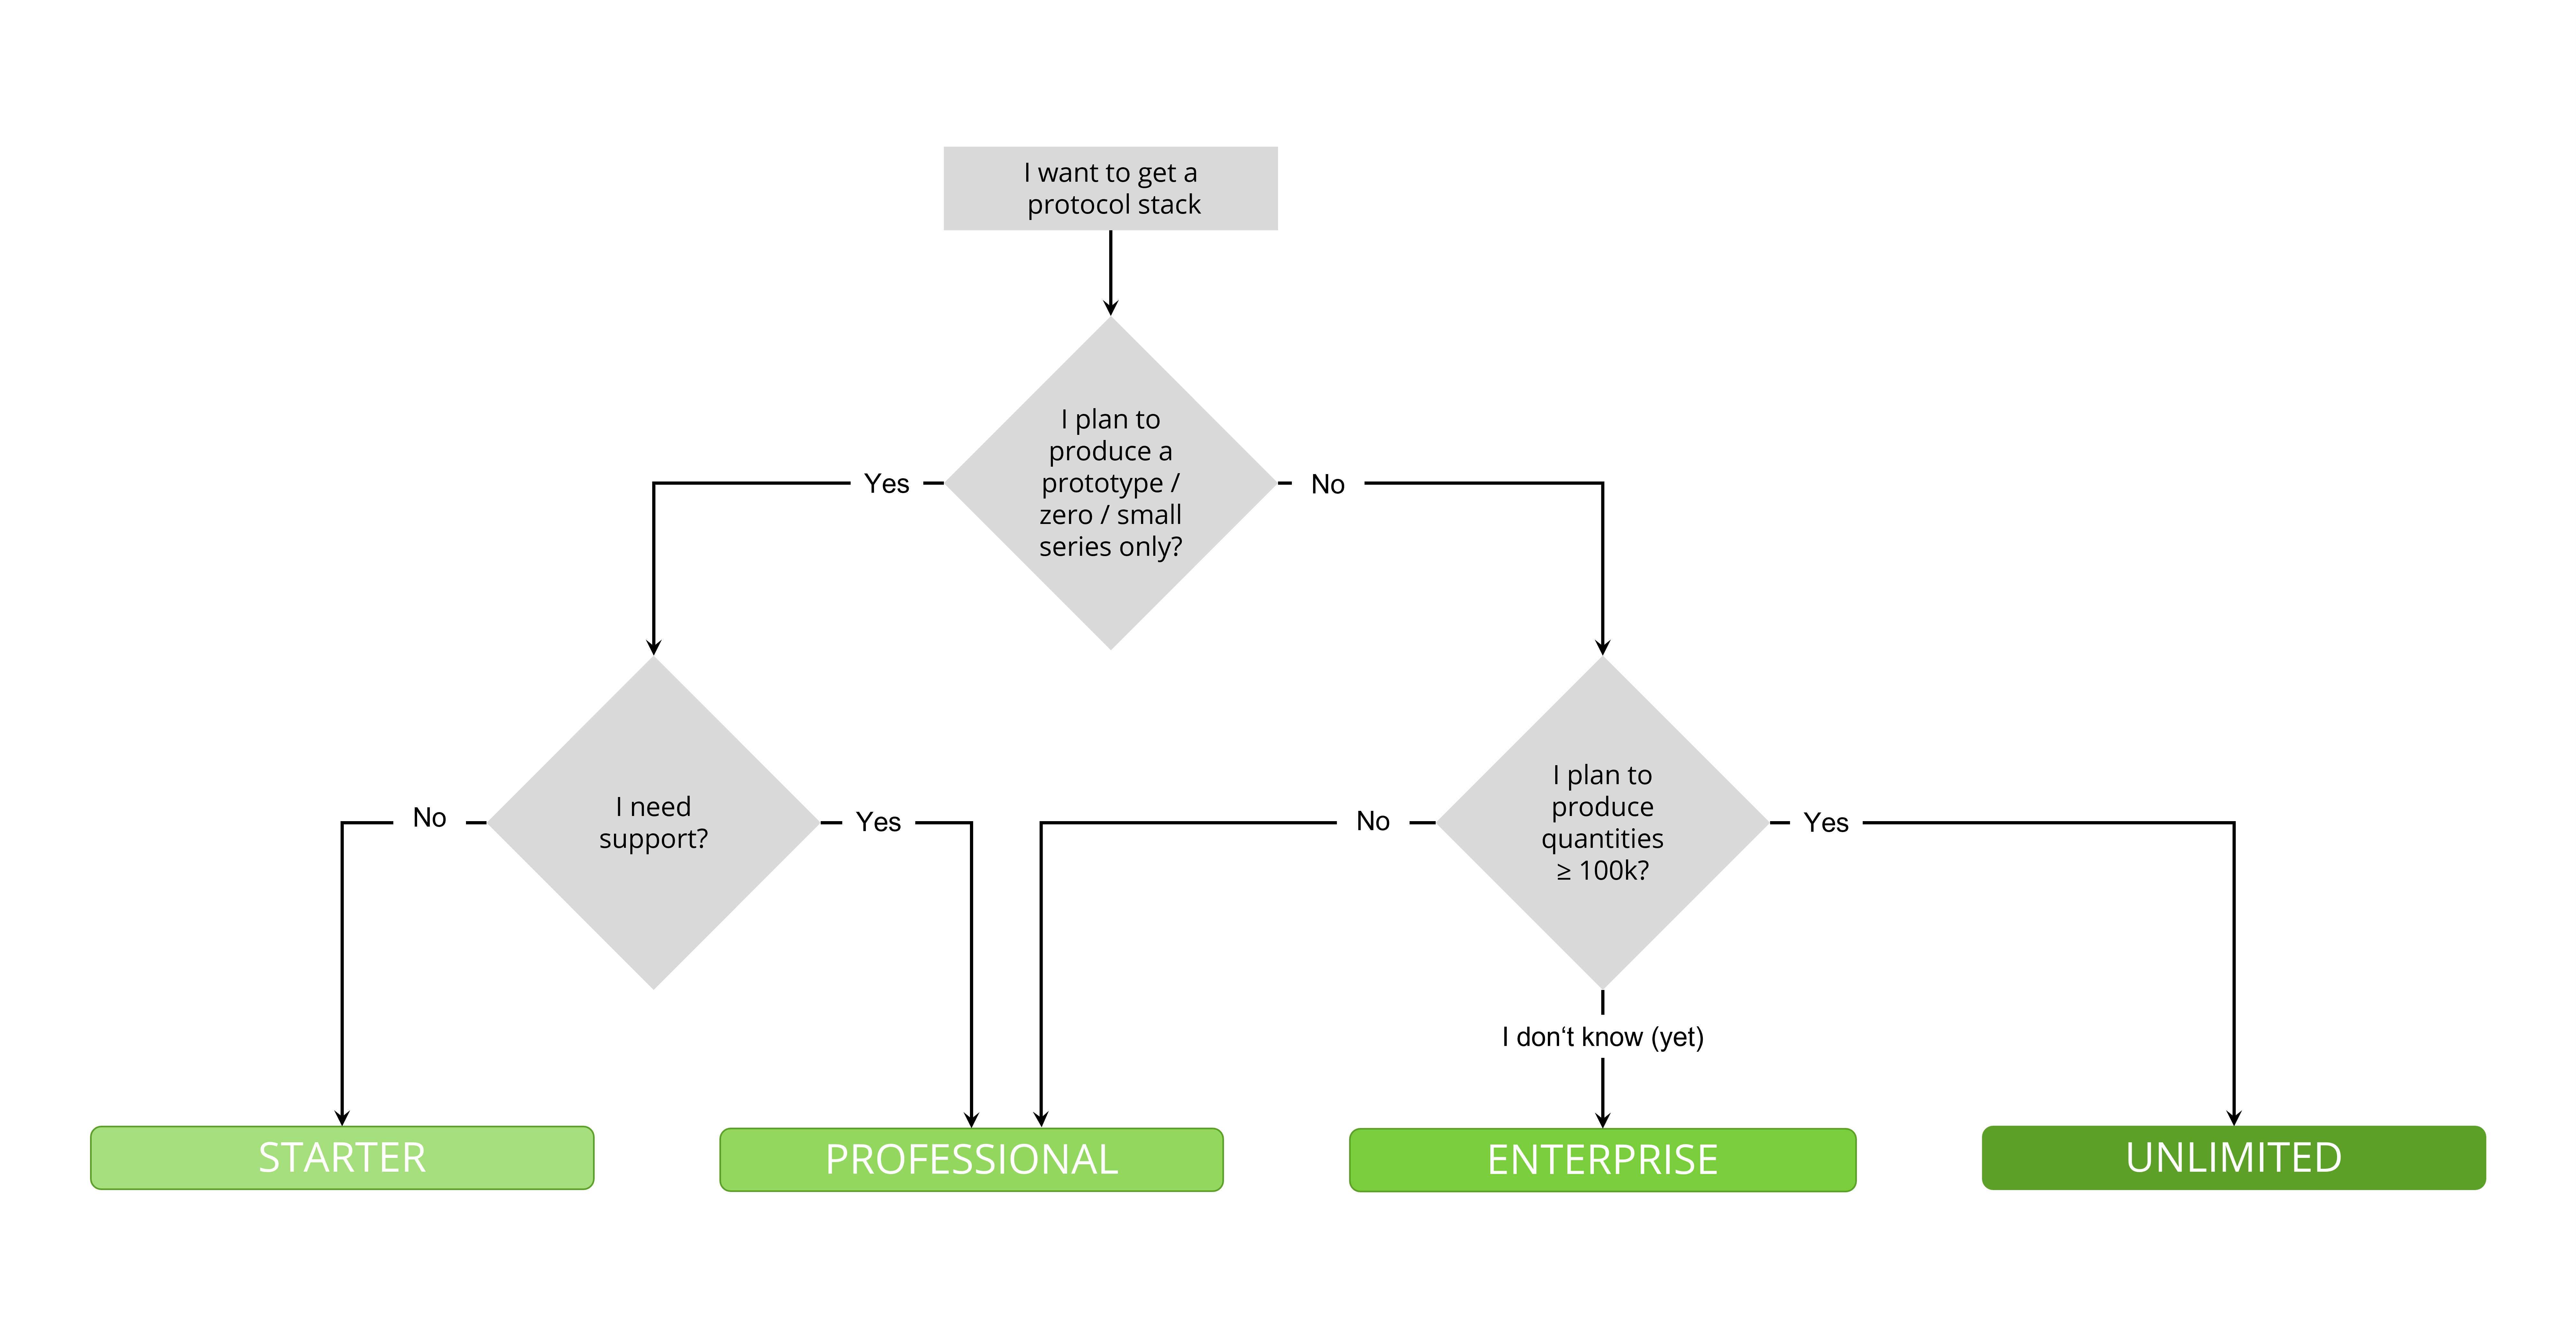 License Model Flowchart for decision making